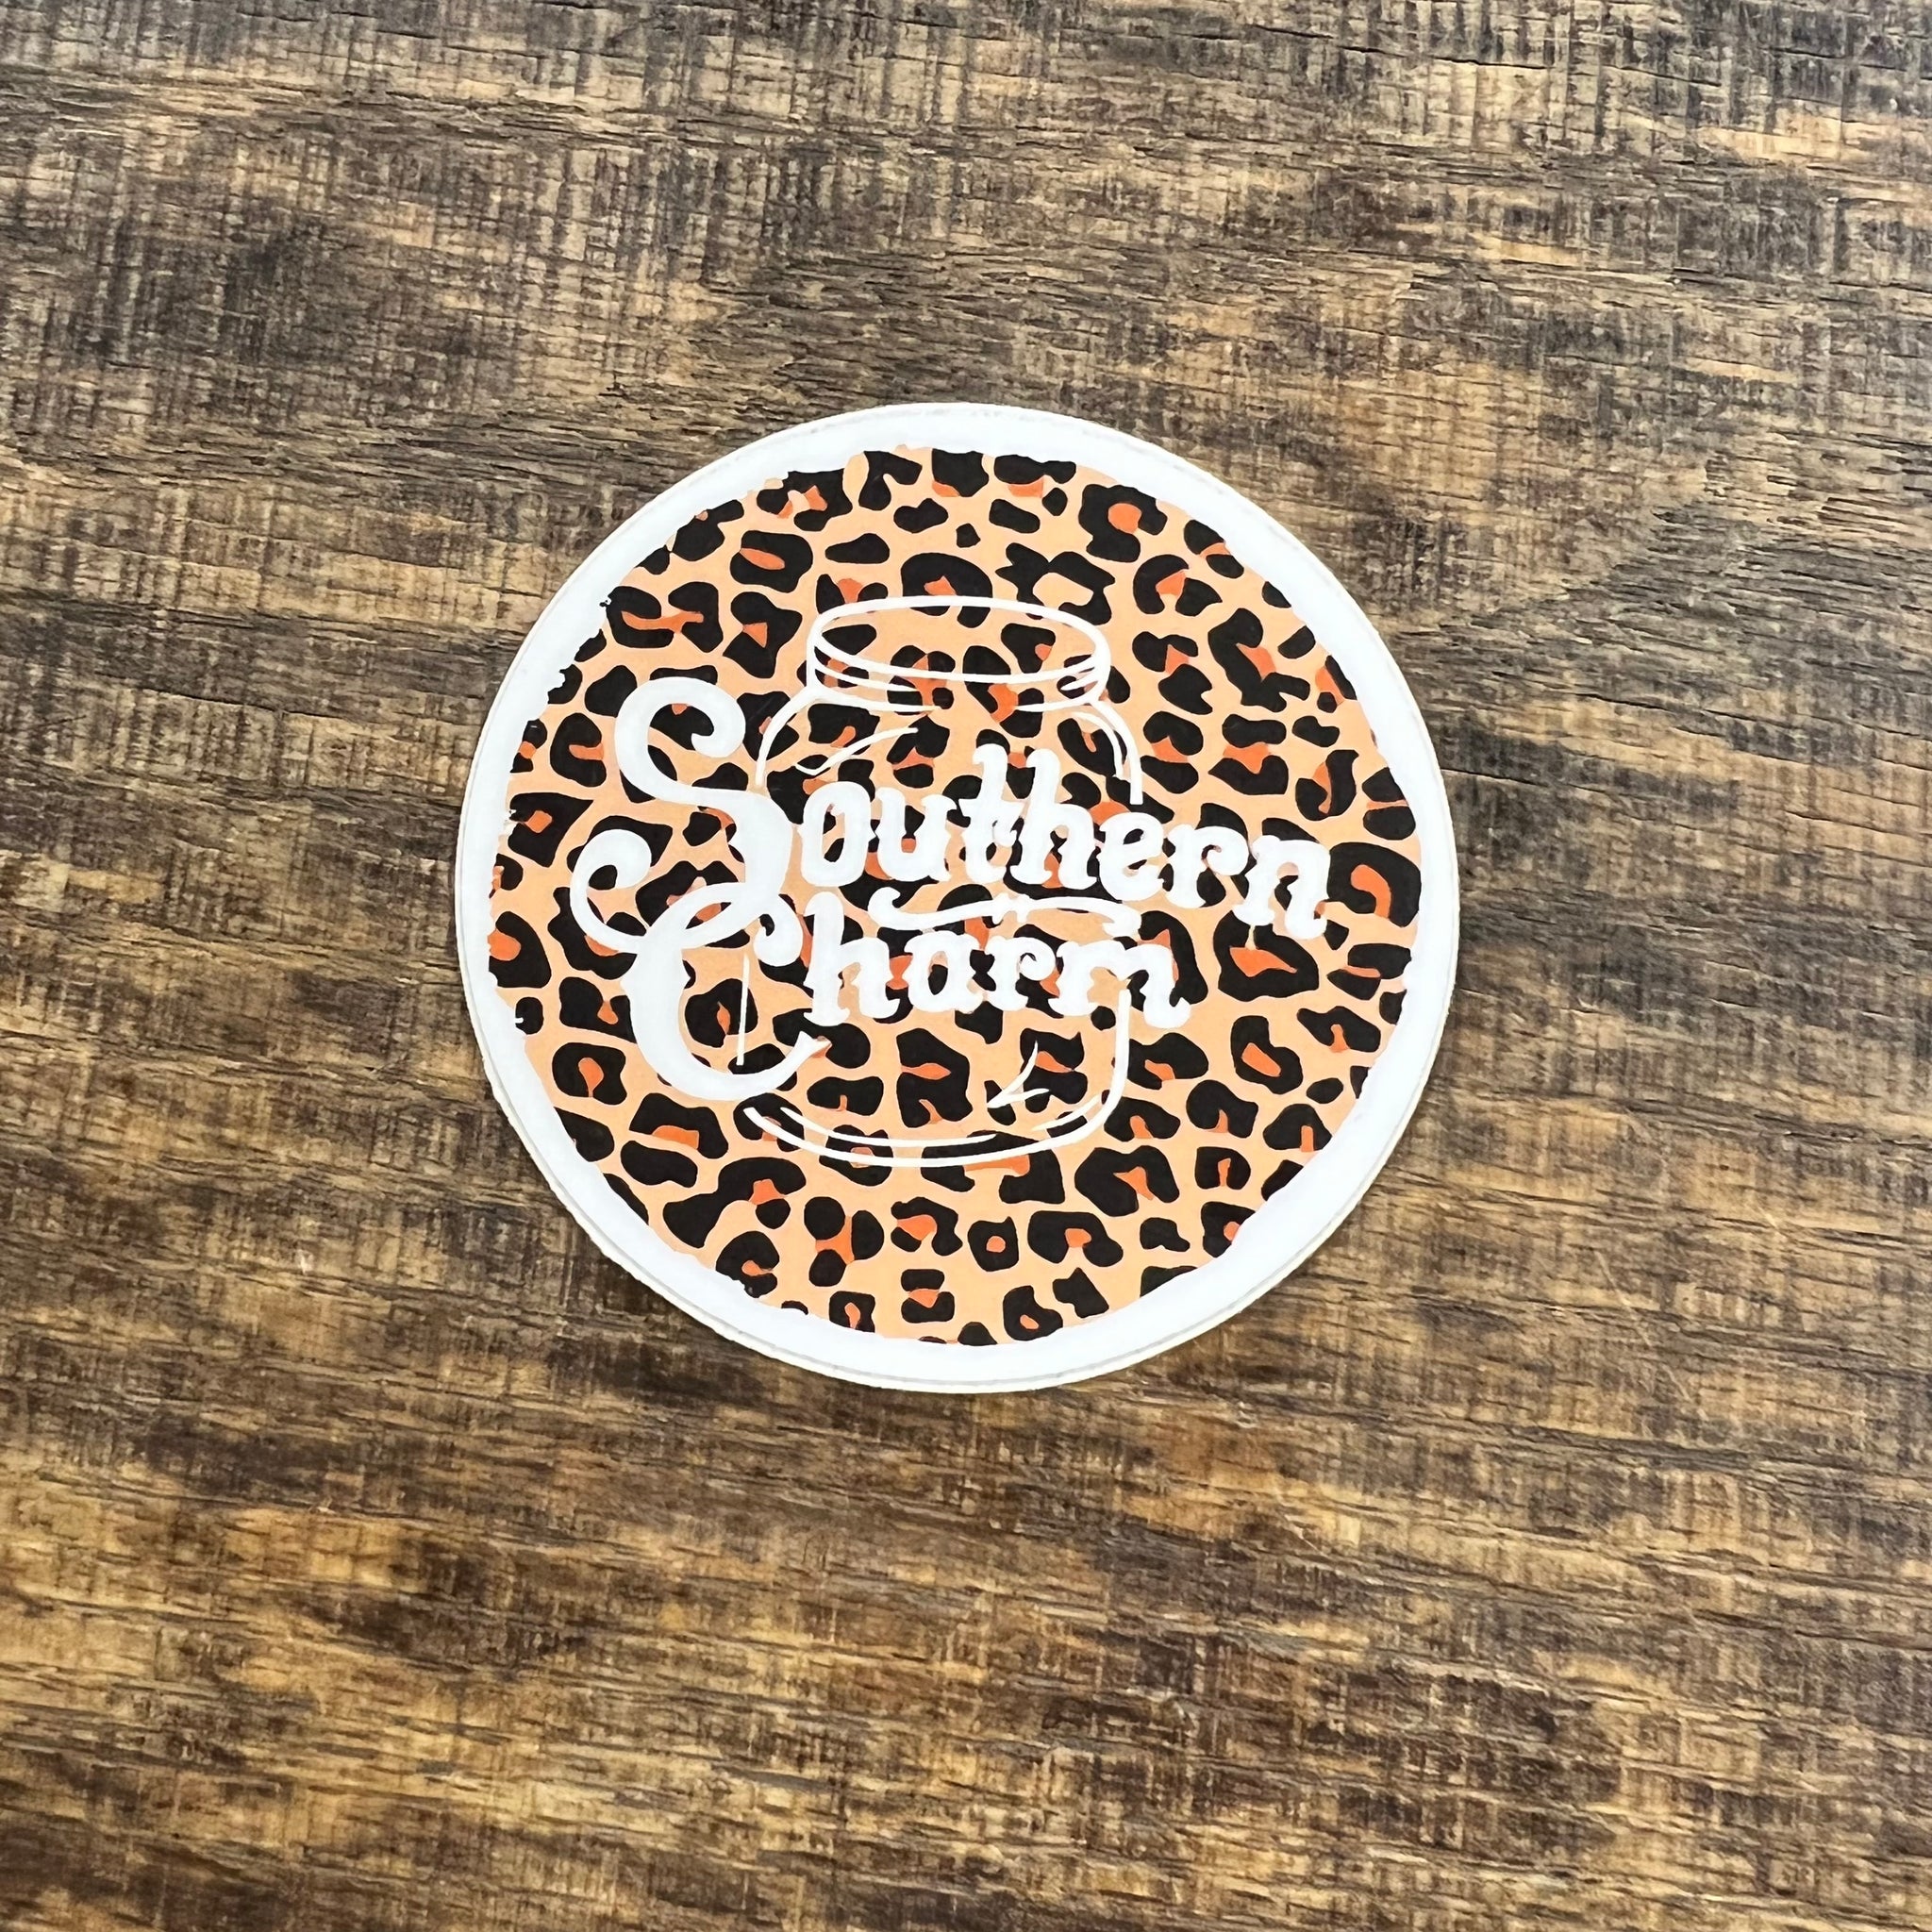 Southern Charm "Original" Sticker - Cheetah